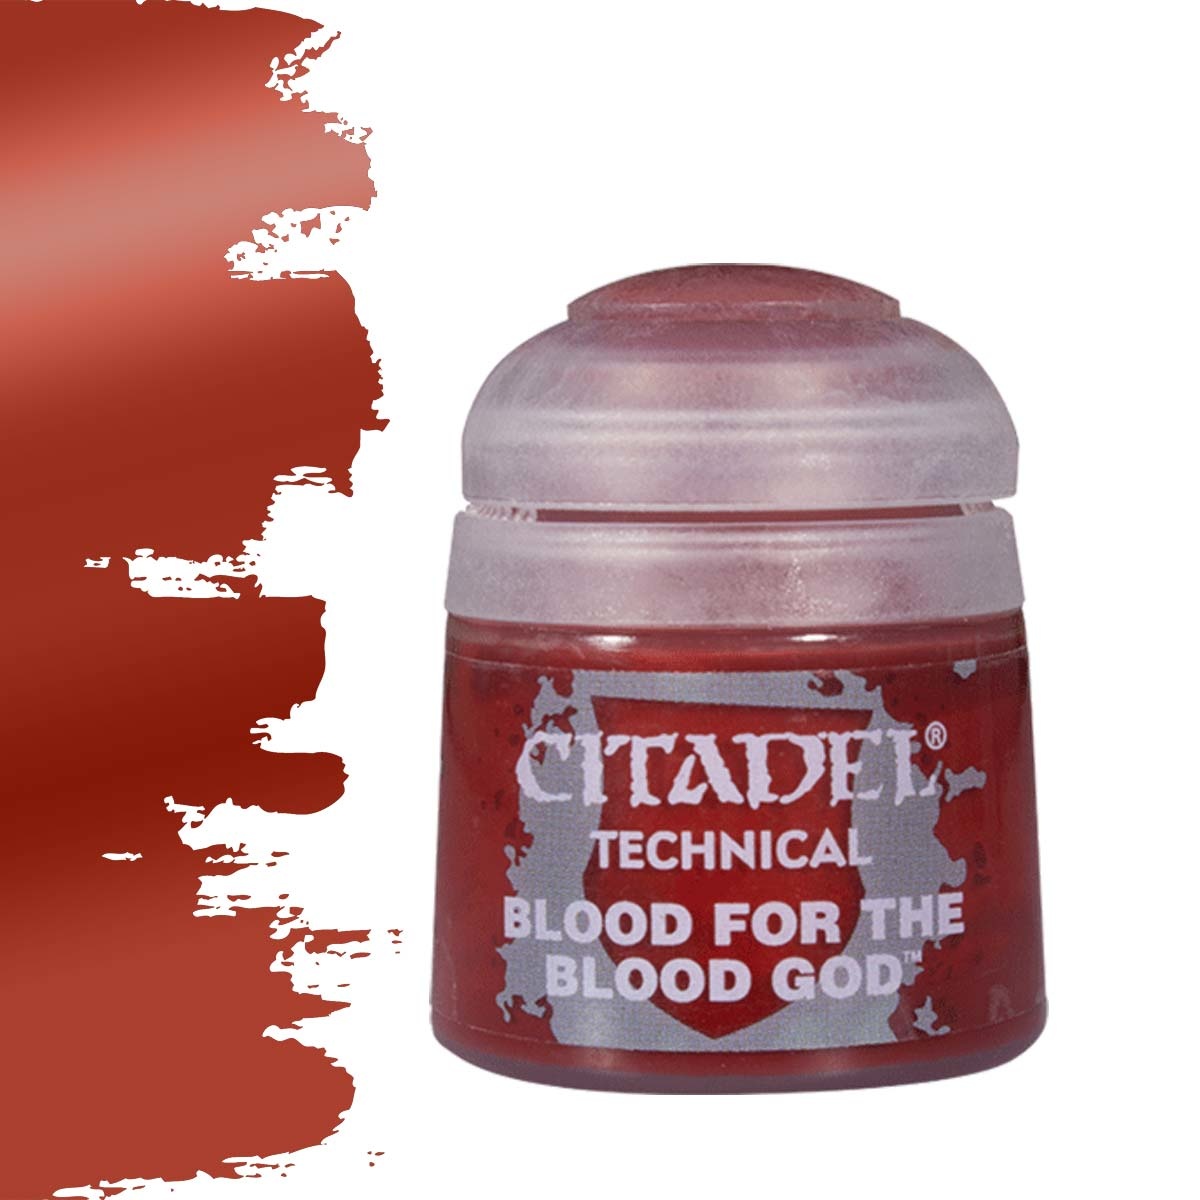 Citadel Blood For The Blood God - Technical Paint - 12ml - 27-05 - Koop nu  bij Scenery Workshop - Scenery Workshop BV